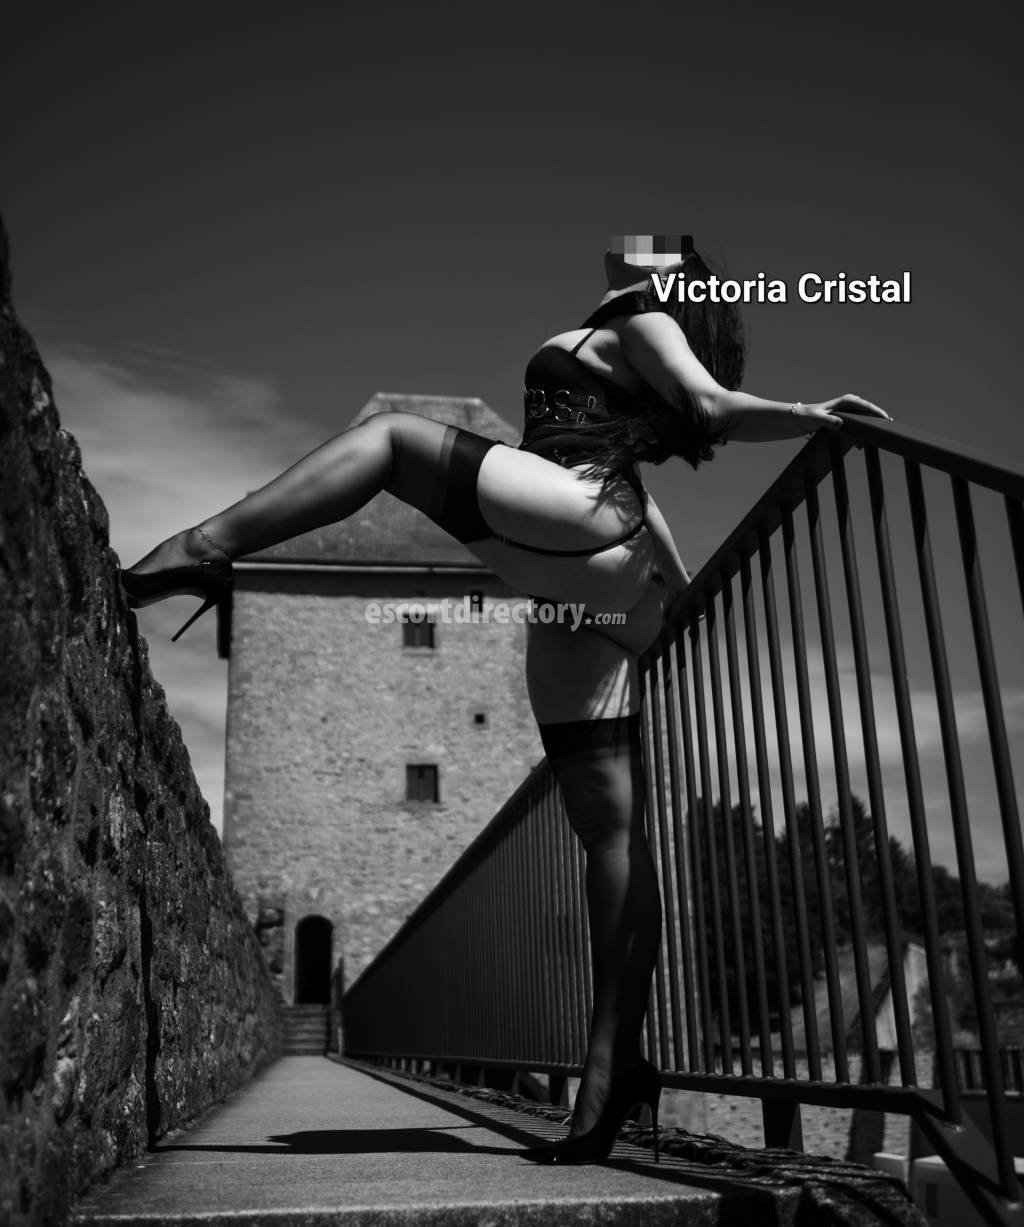 Victoria-Cristal Vip Escort escort in Tel Aviv offers Golden Shower (give) services